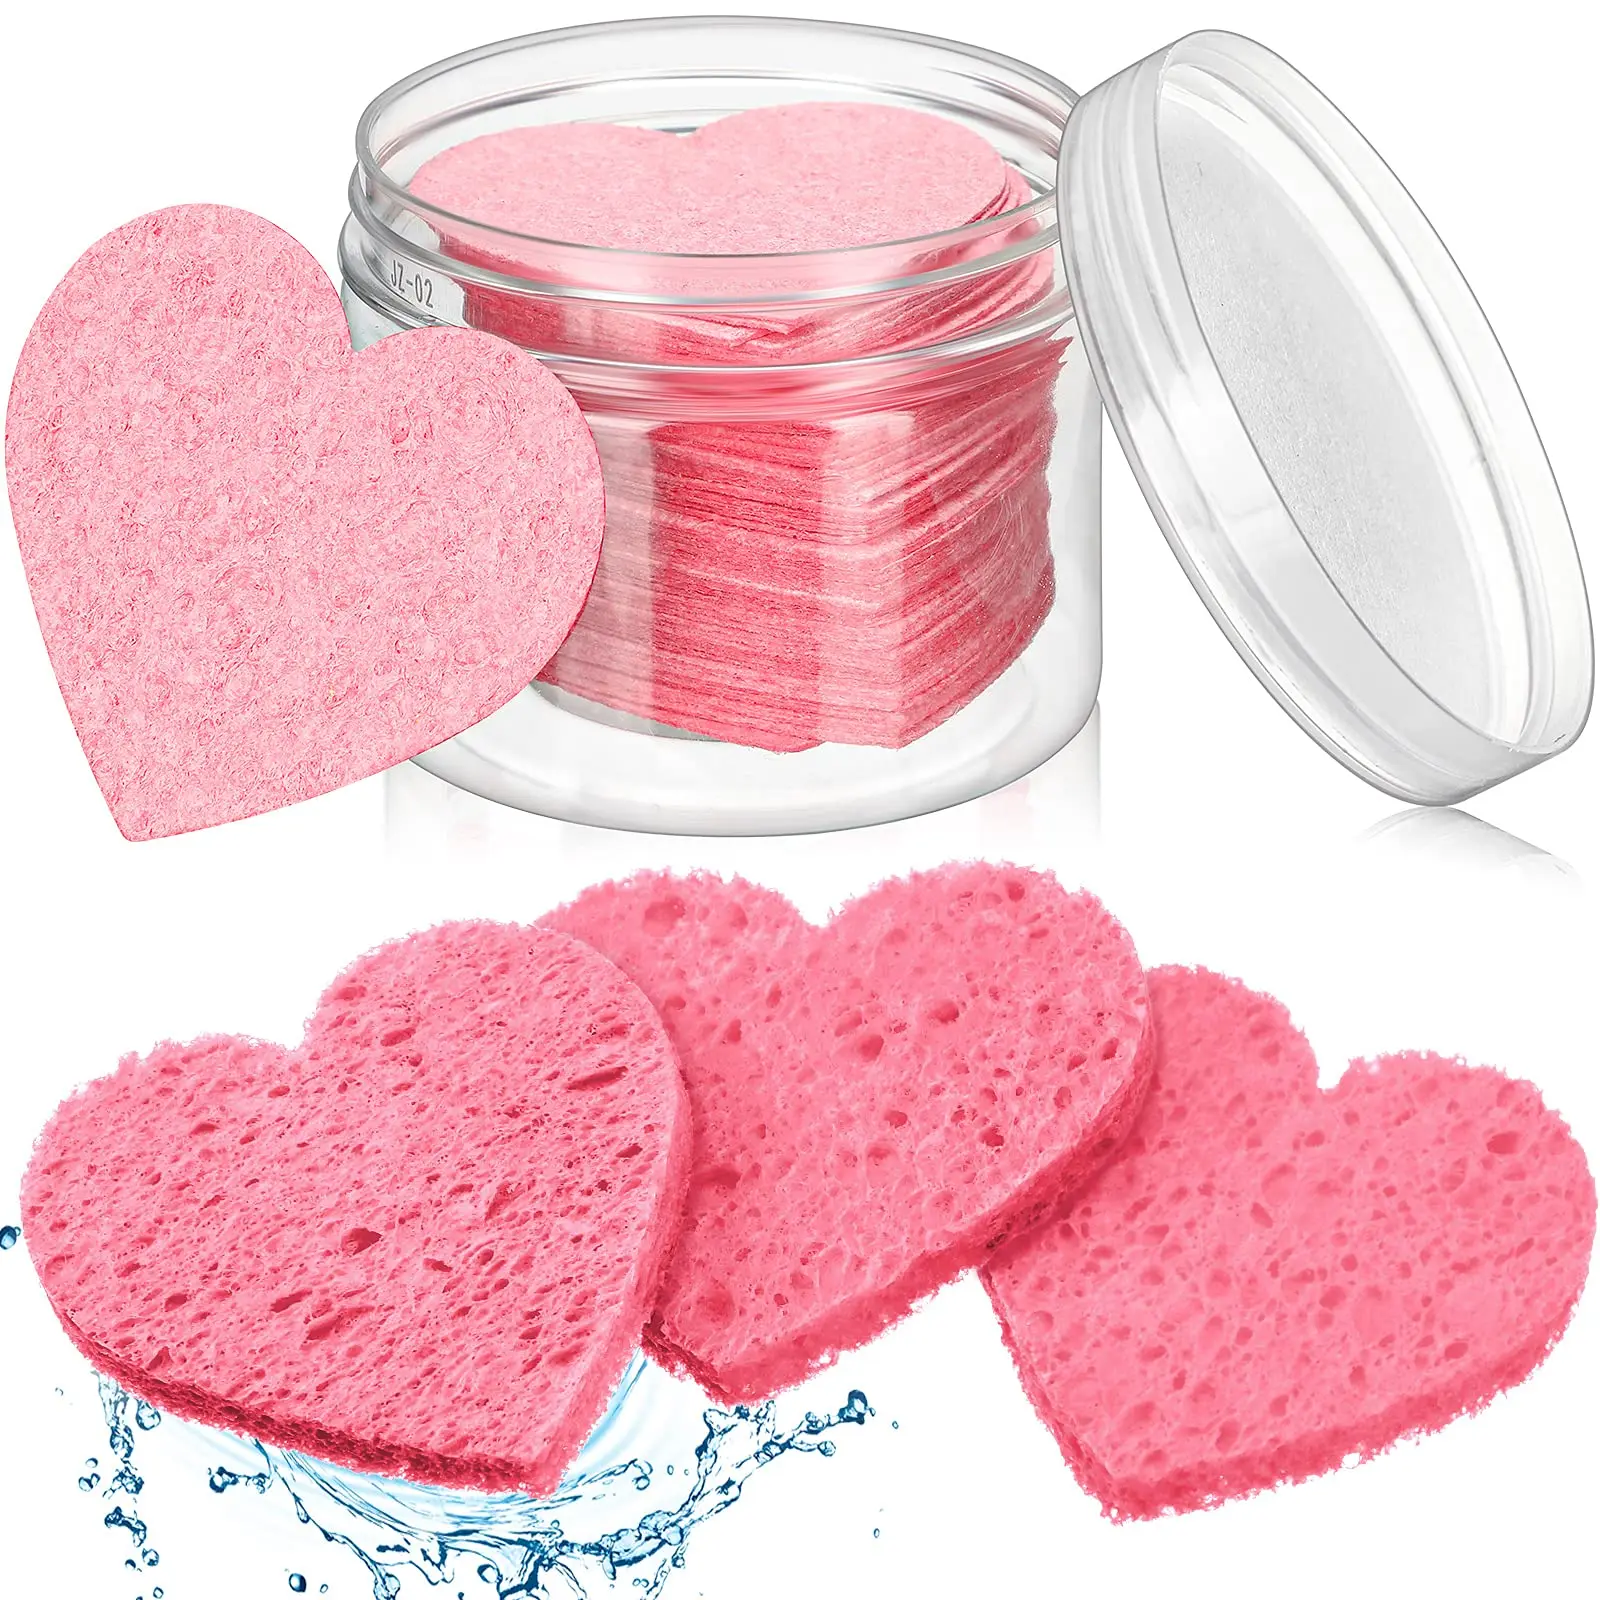 

60 Pieces Heart Shape Facial Sponges Compressed Face Sponge Natural Sponge Pads For Washing Face Cleansing Makeup Puff